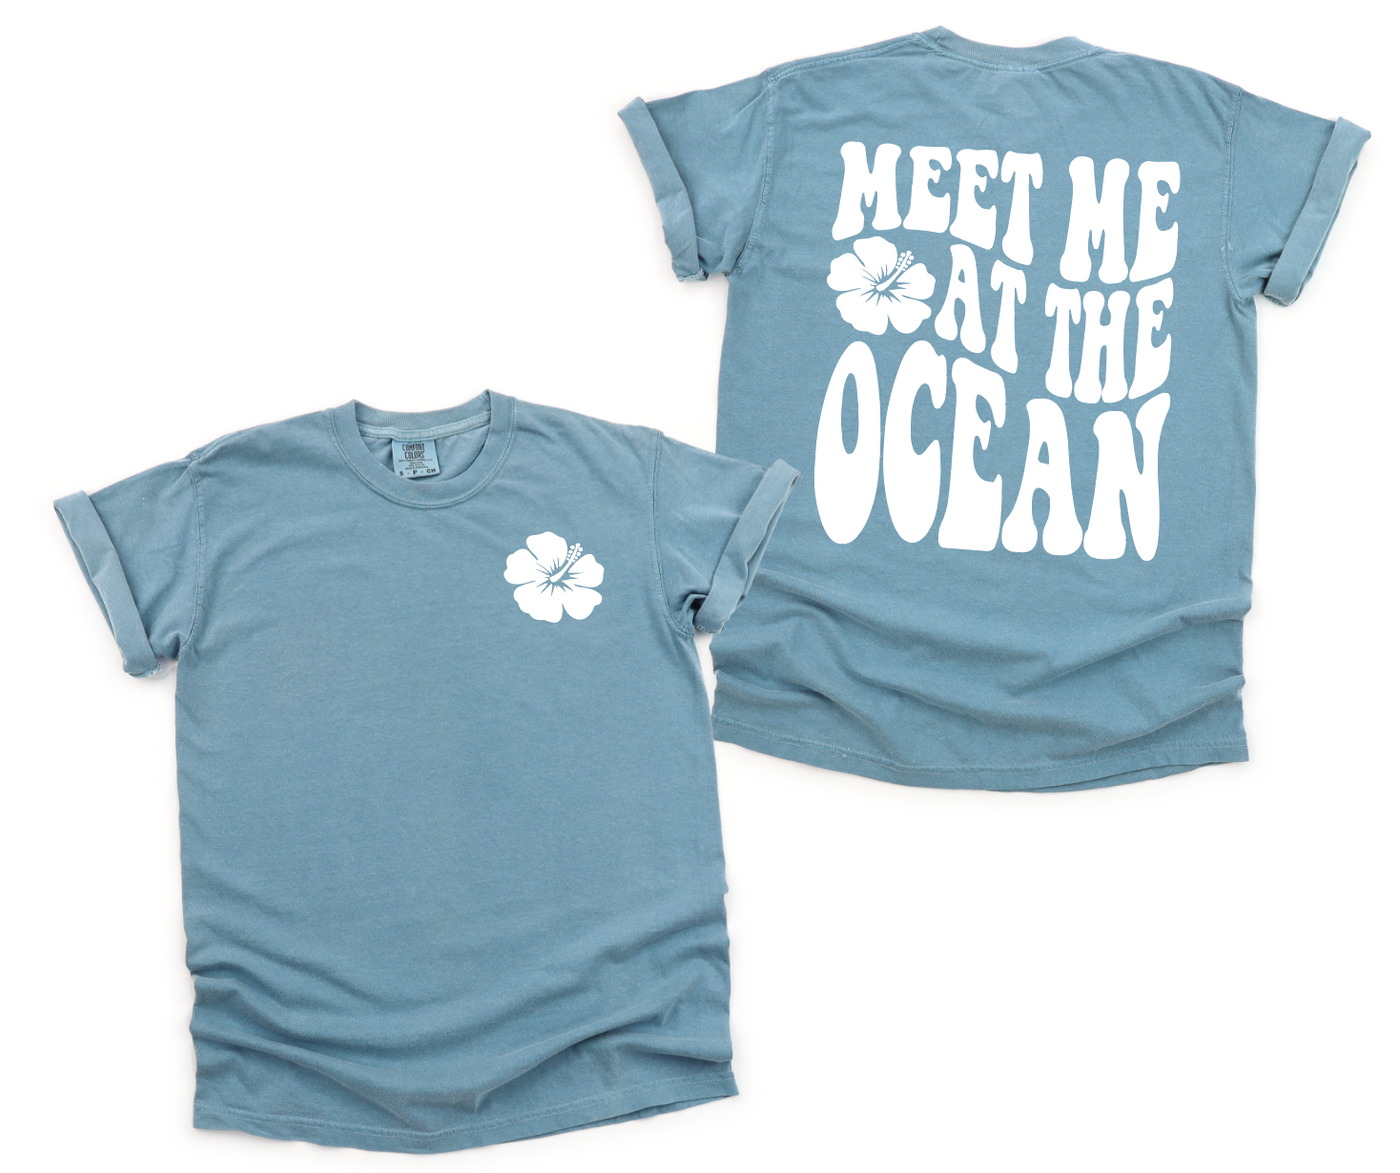 Meet Me At The Ocean Graphic T-shirt